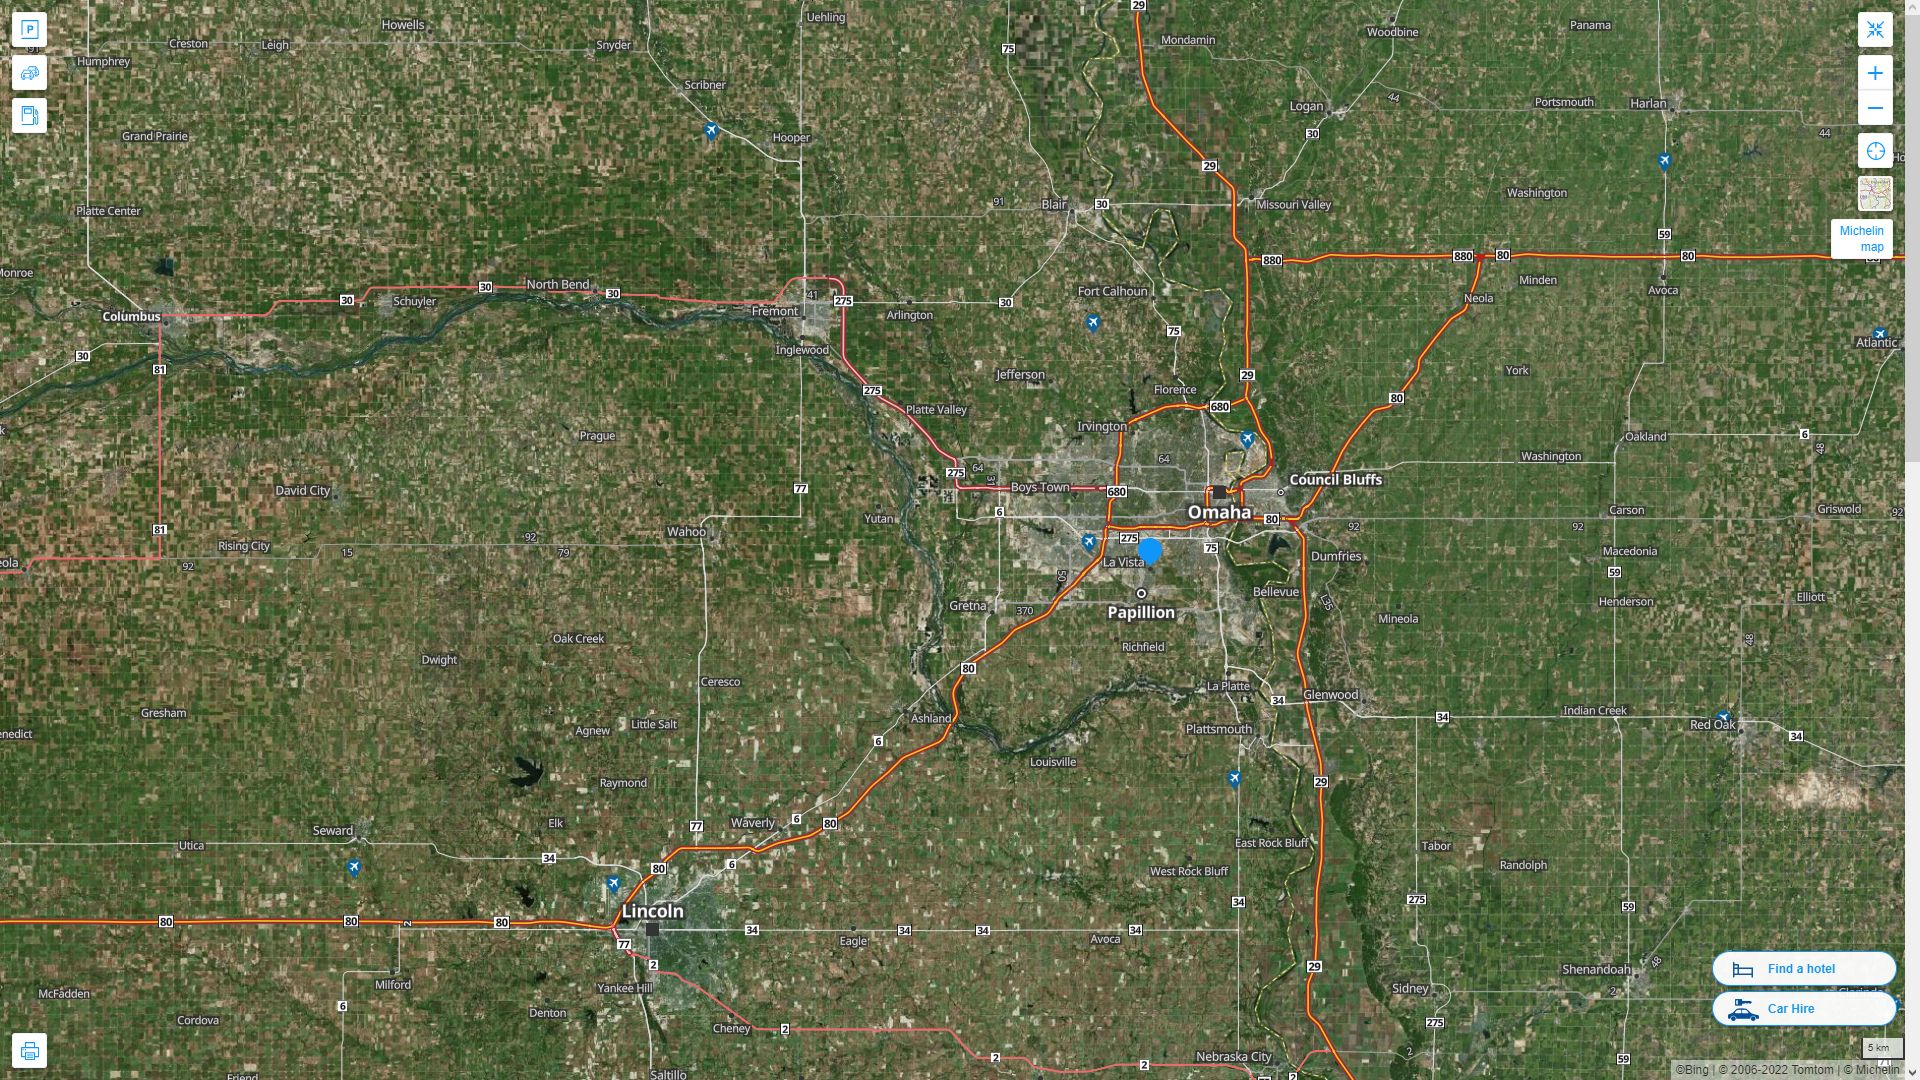 La Vista Nebraska Highway and Road Map with Satellite View